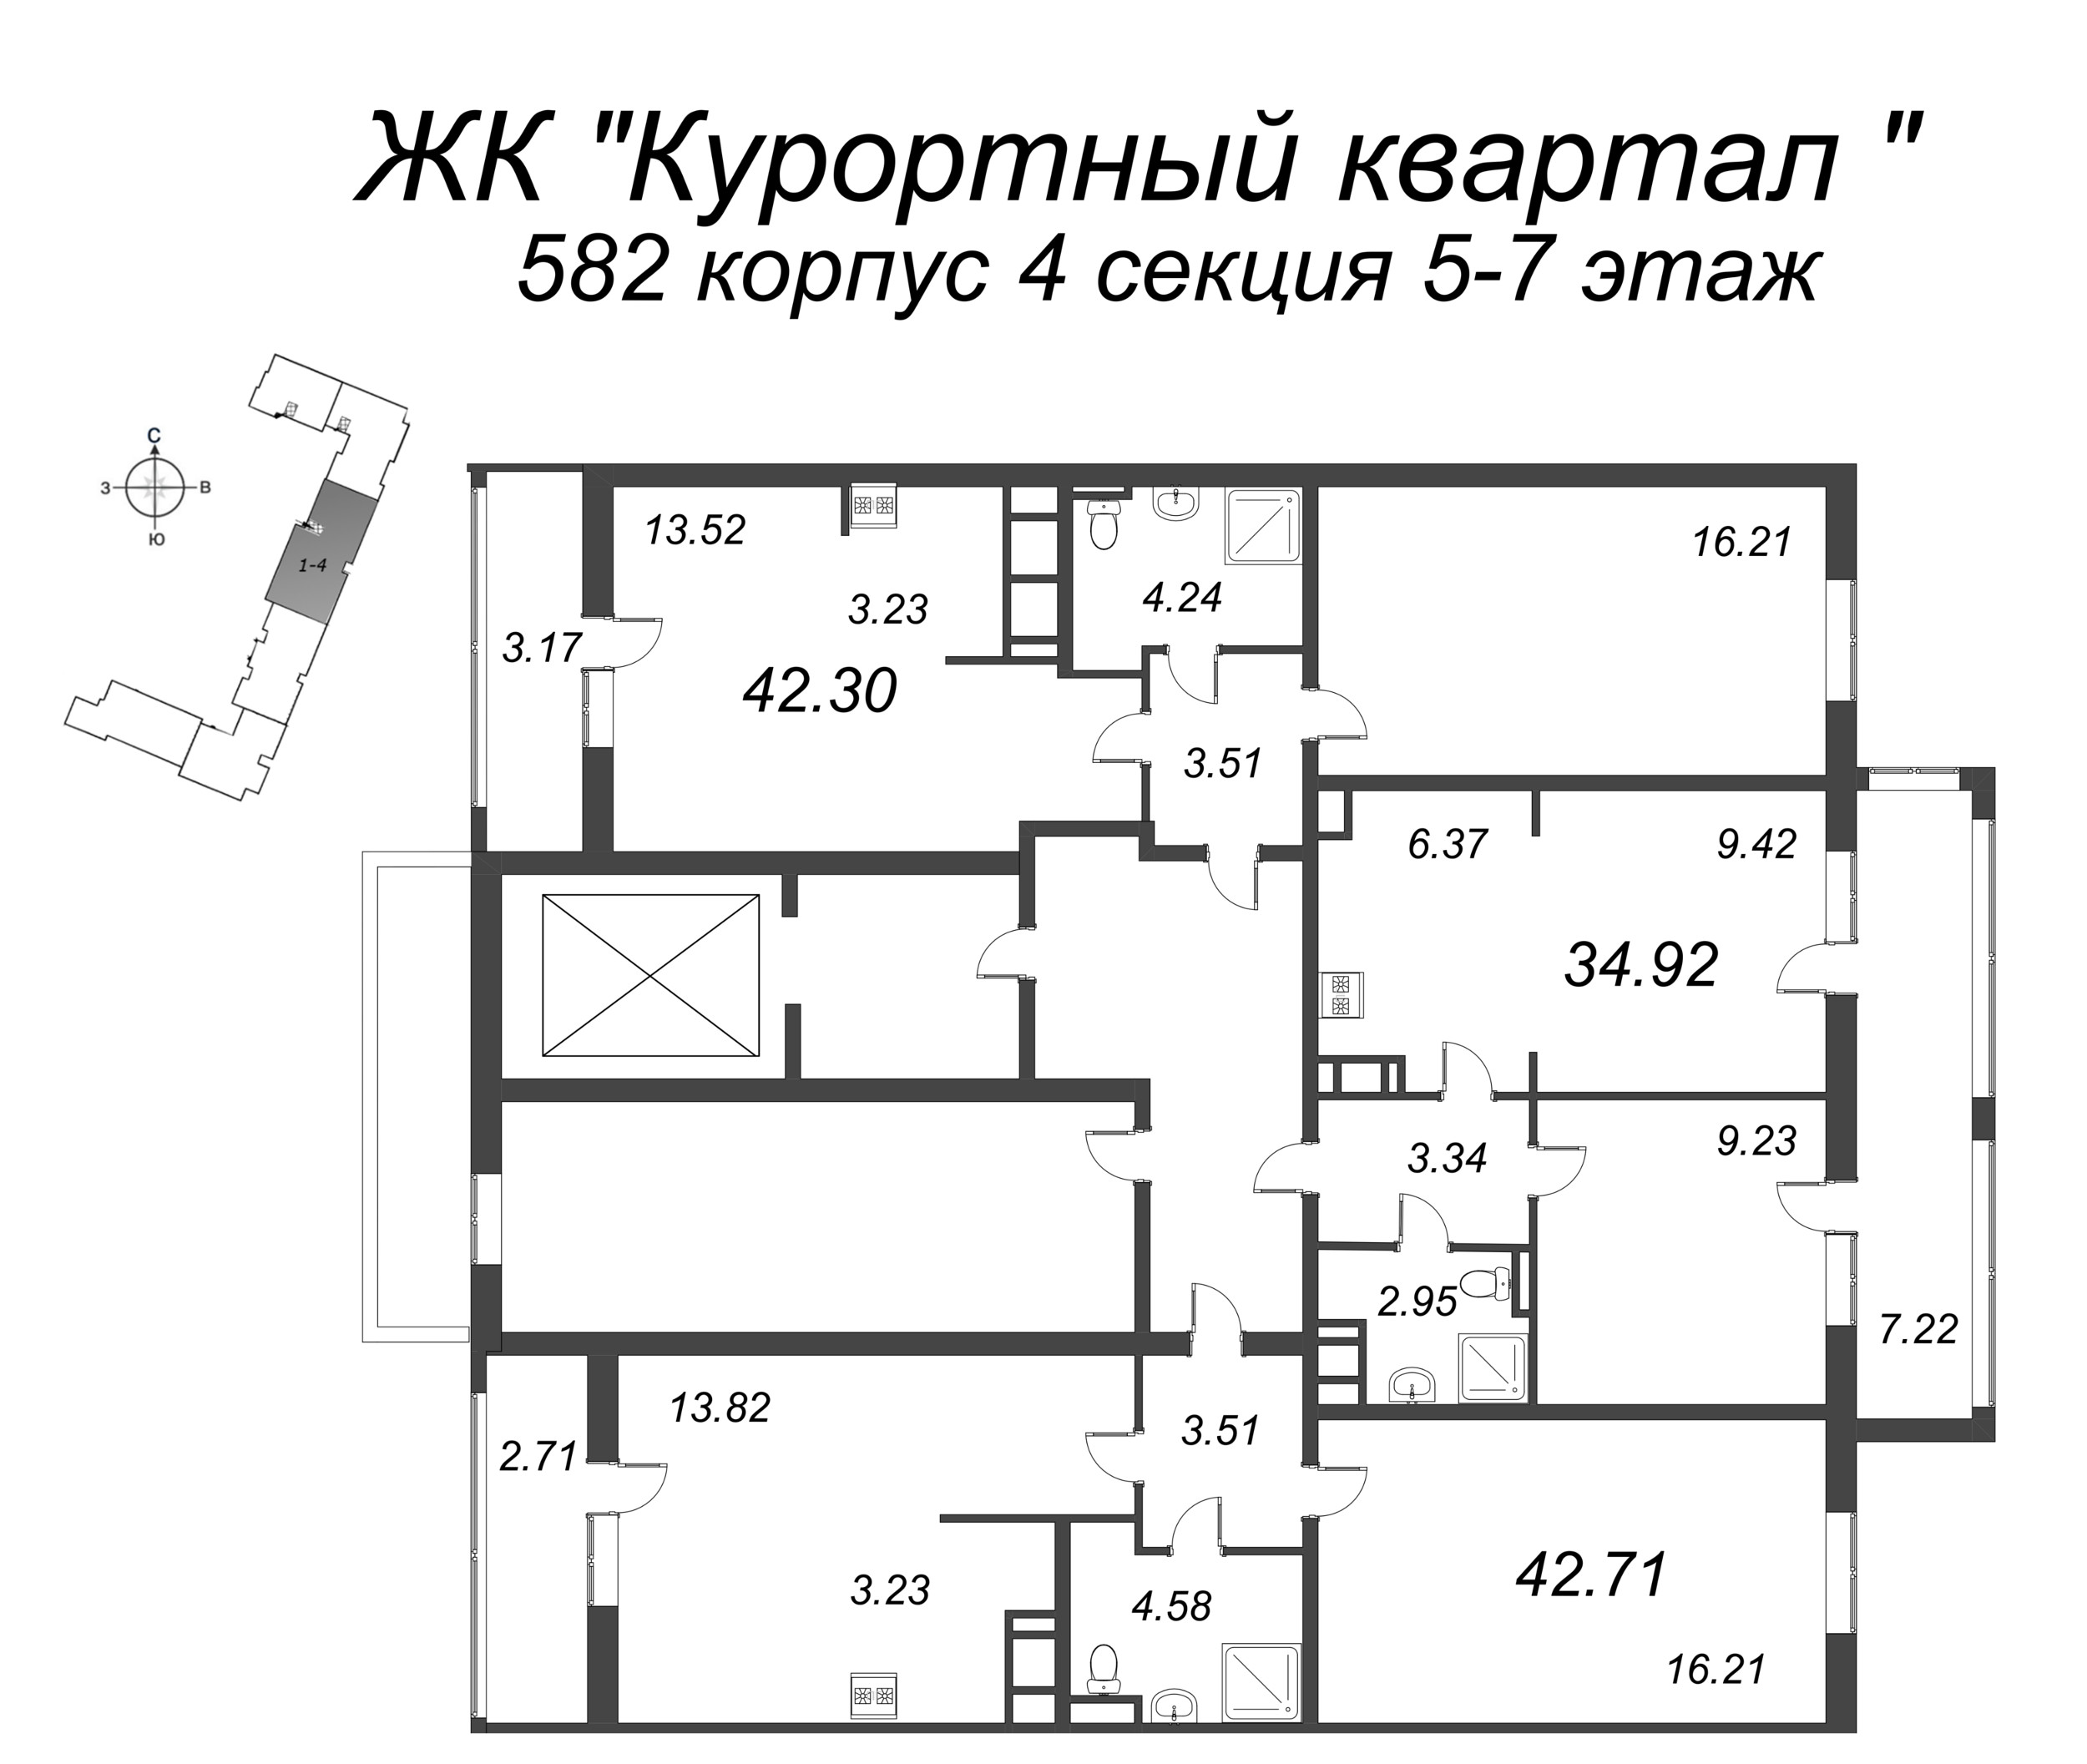 2-комнатная (Евро) квартира, 42.71 м² - планировка этажа